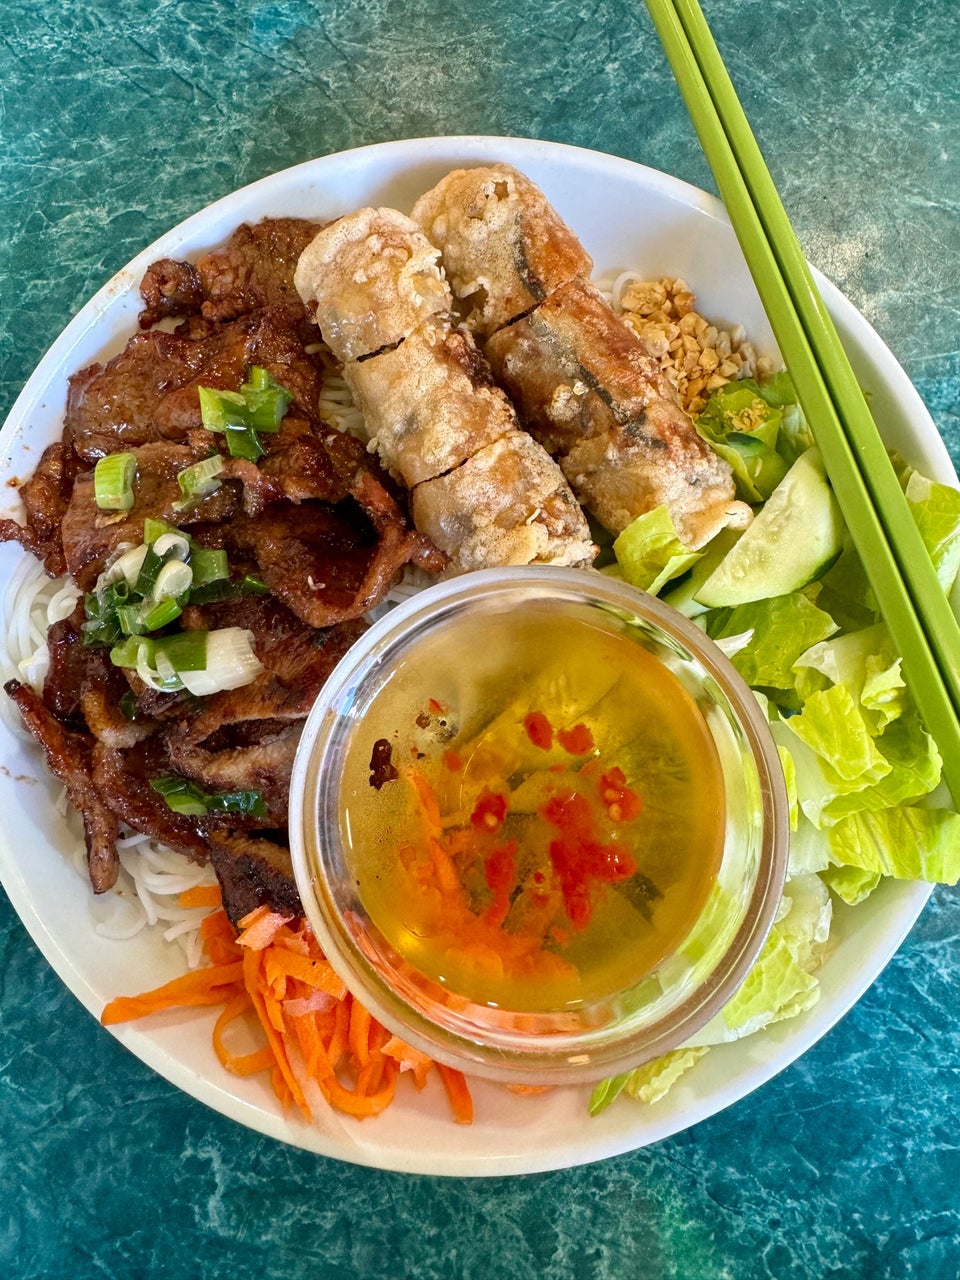 Sunflower Vietnamese Restaurant & Hawaiian Barbecue